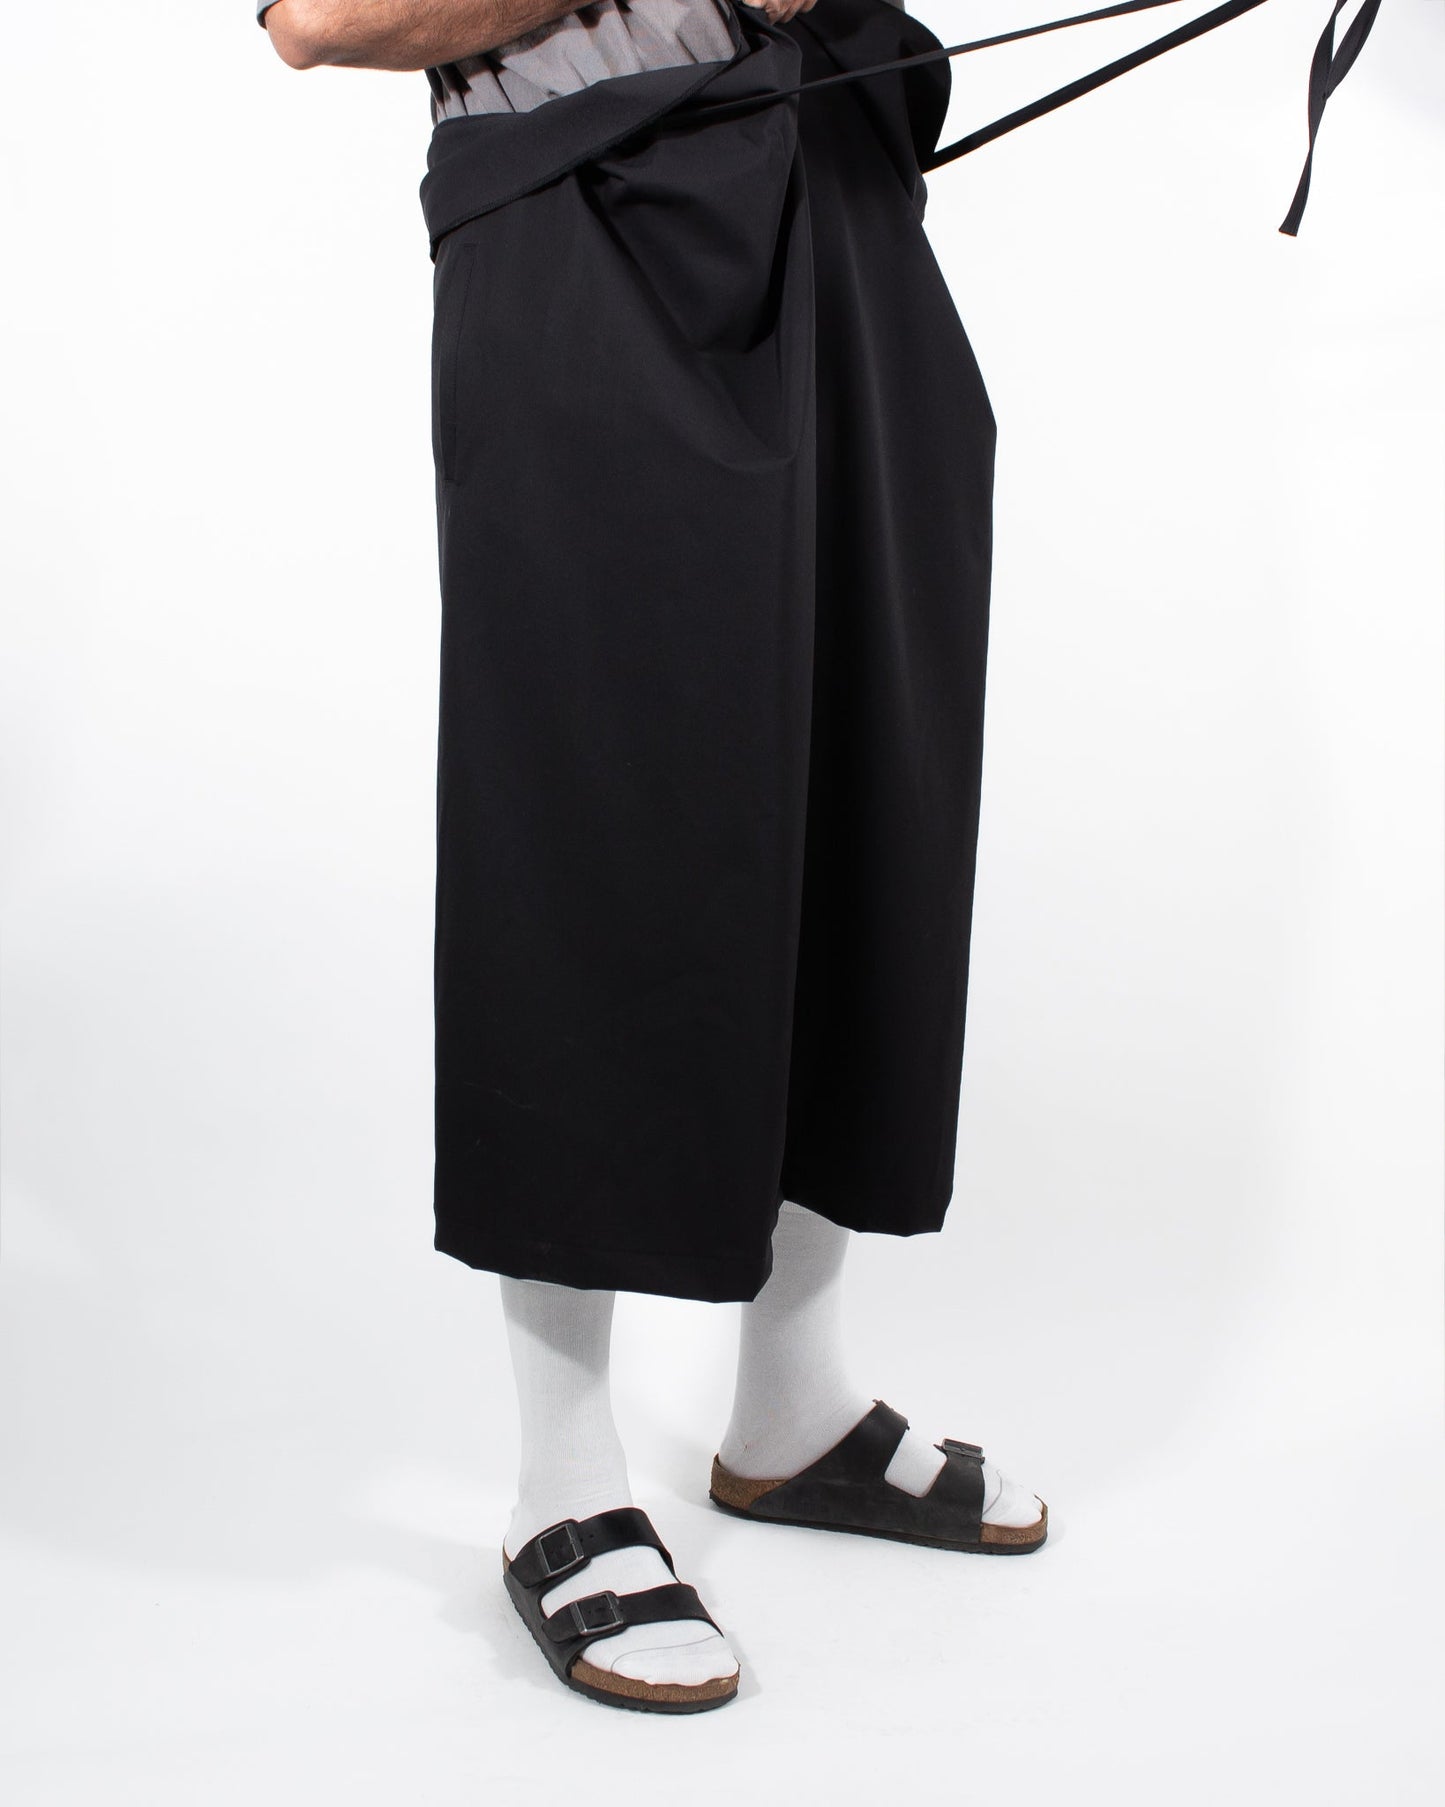 Simple Skirt - V1 - GARUDA